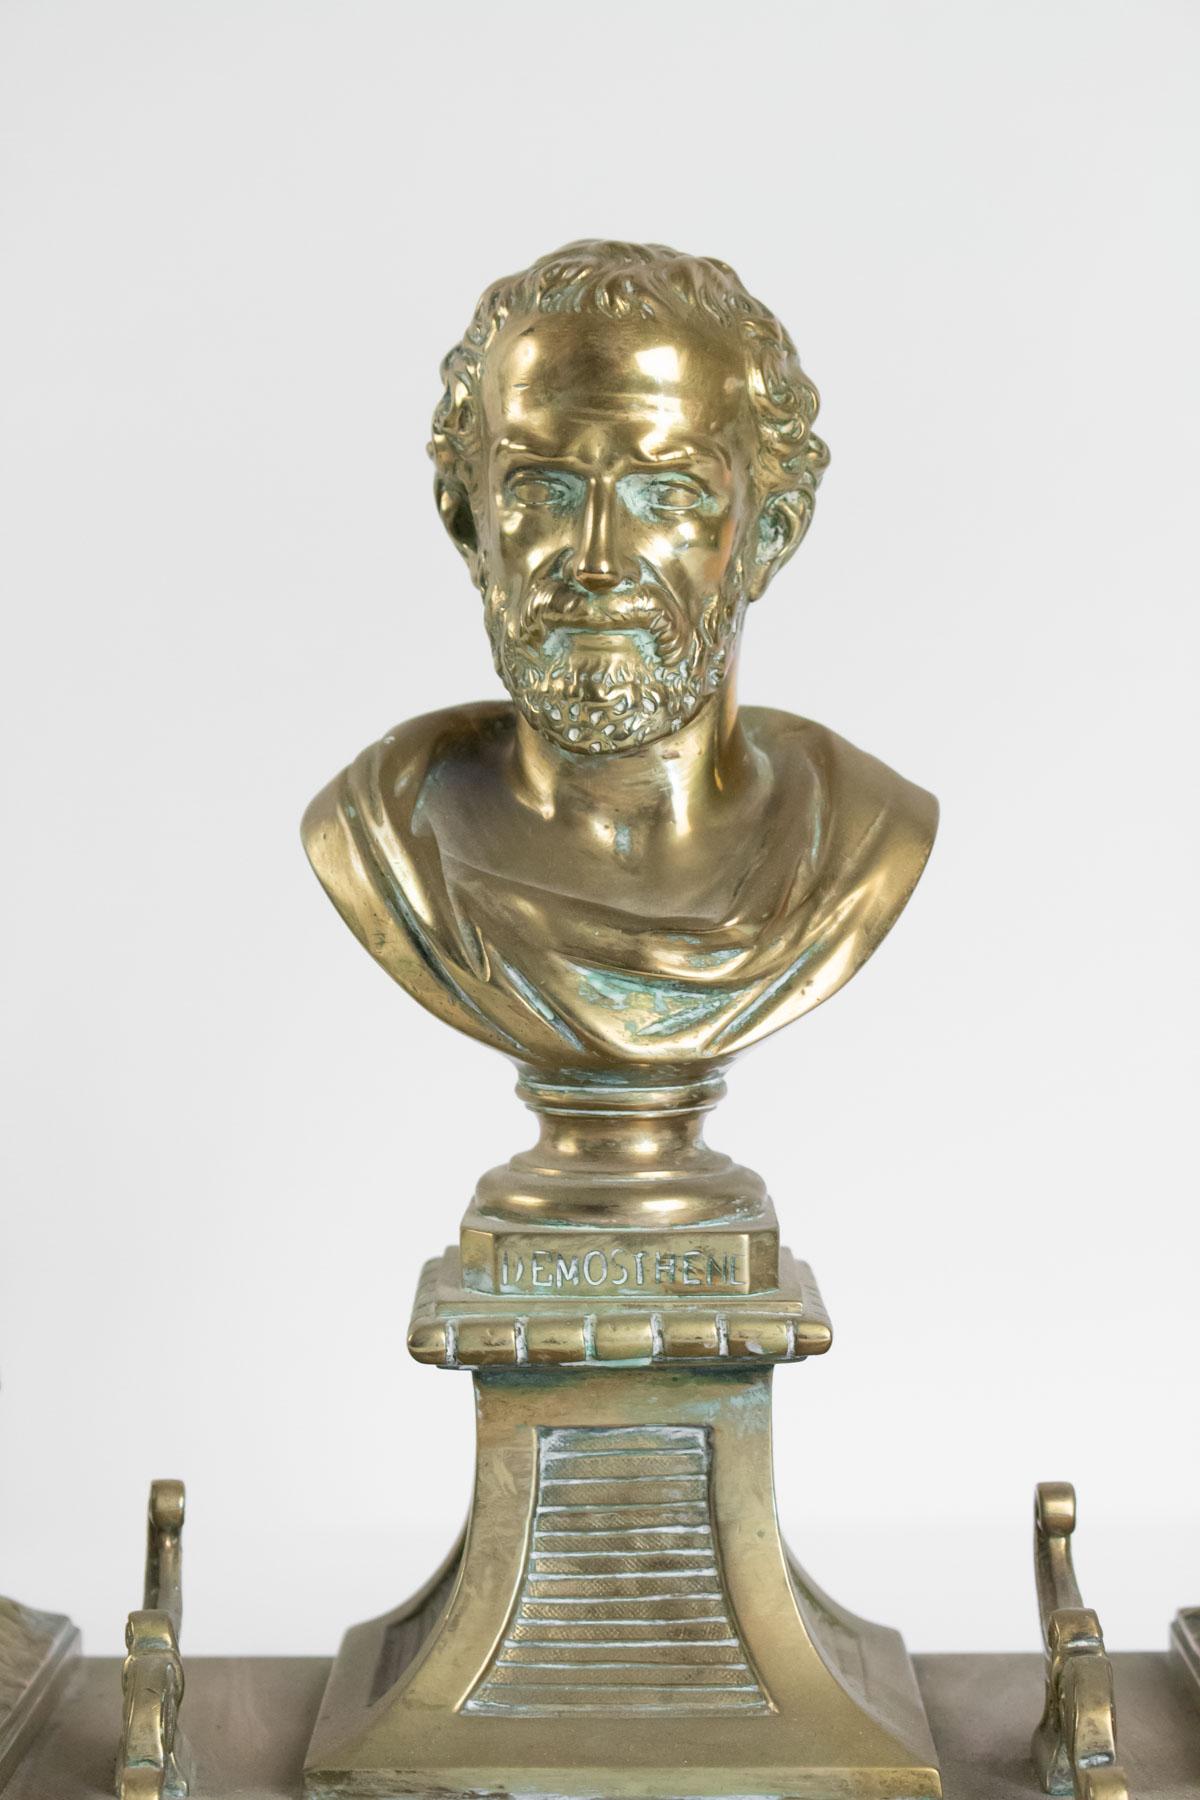 Inkwell in bronze napoleon iii period, effigy of Demosthenes, one Abimée hinges.
Measures: H 30cm, W 39cm, W 20cm.